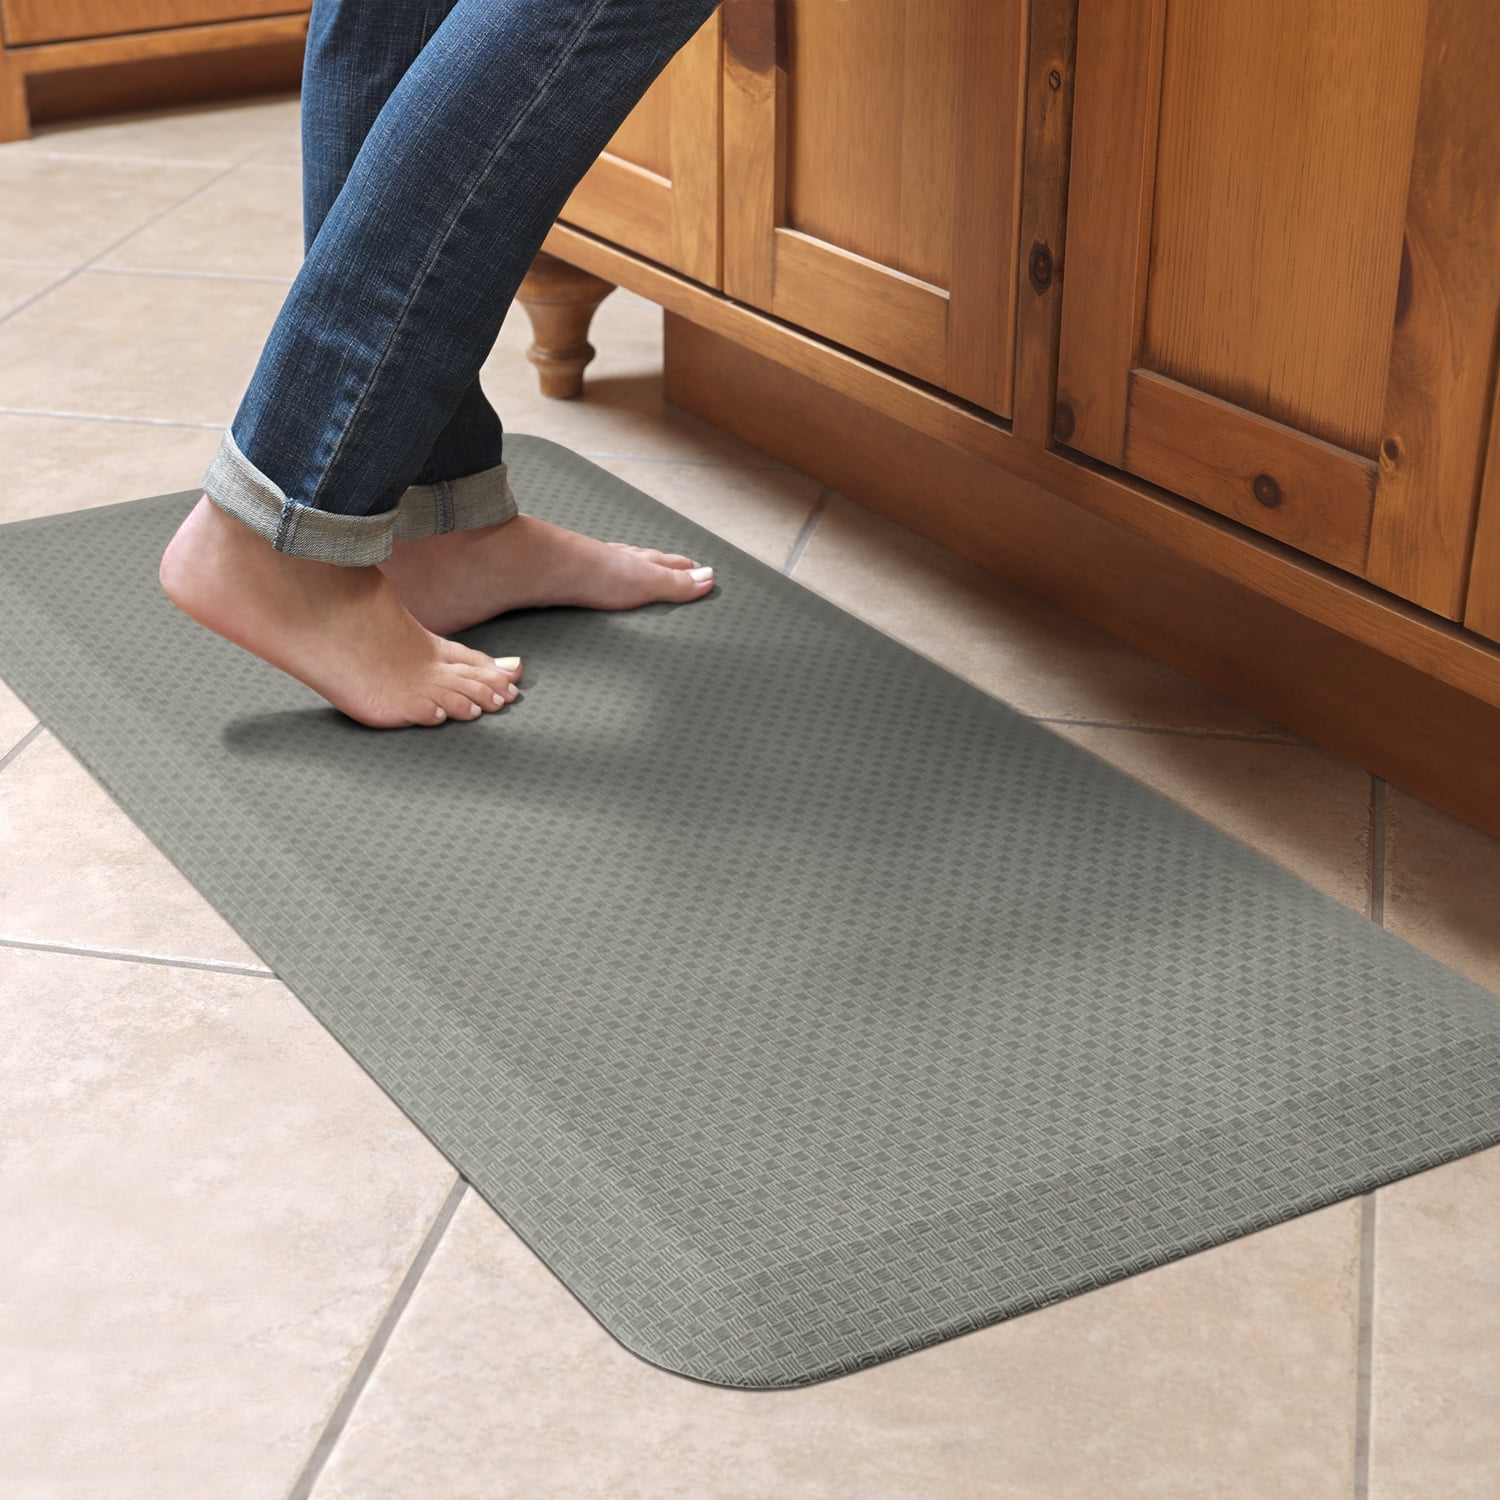 OPENBOX Newlife by GelPro Anti-fatigue DESIGNER Comfort Kitchen Floor Mat 20x48 for sale online 